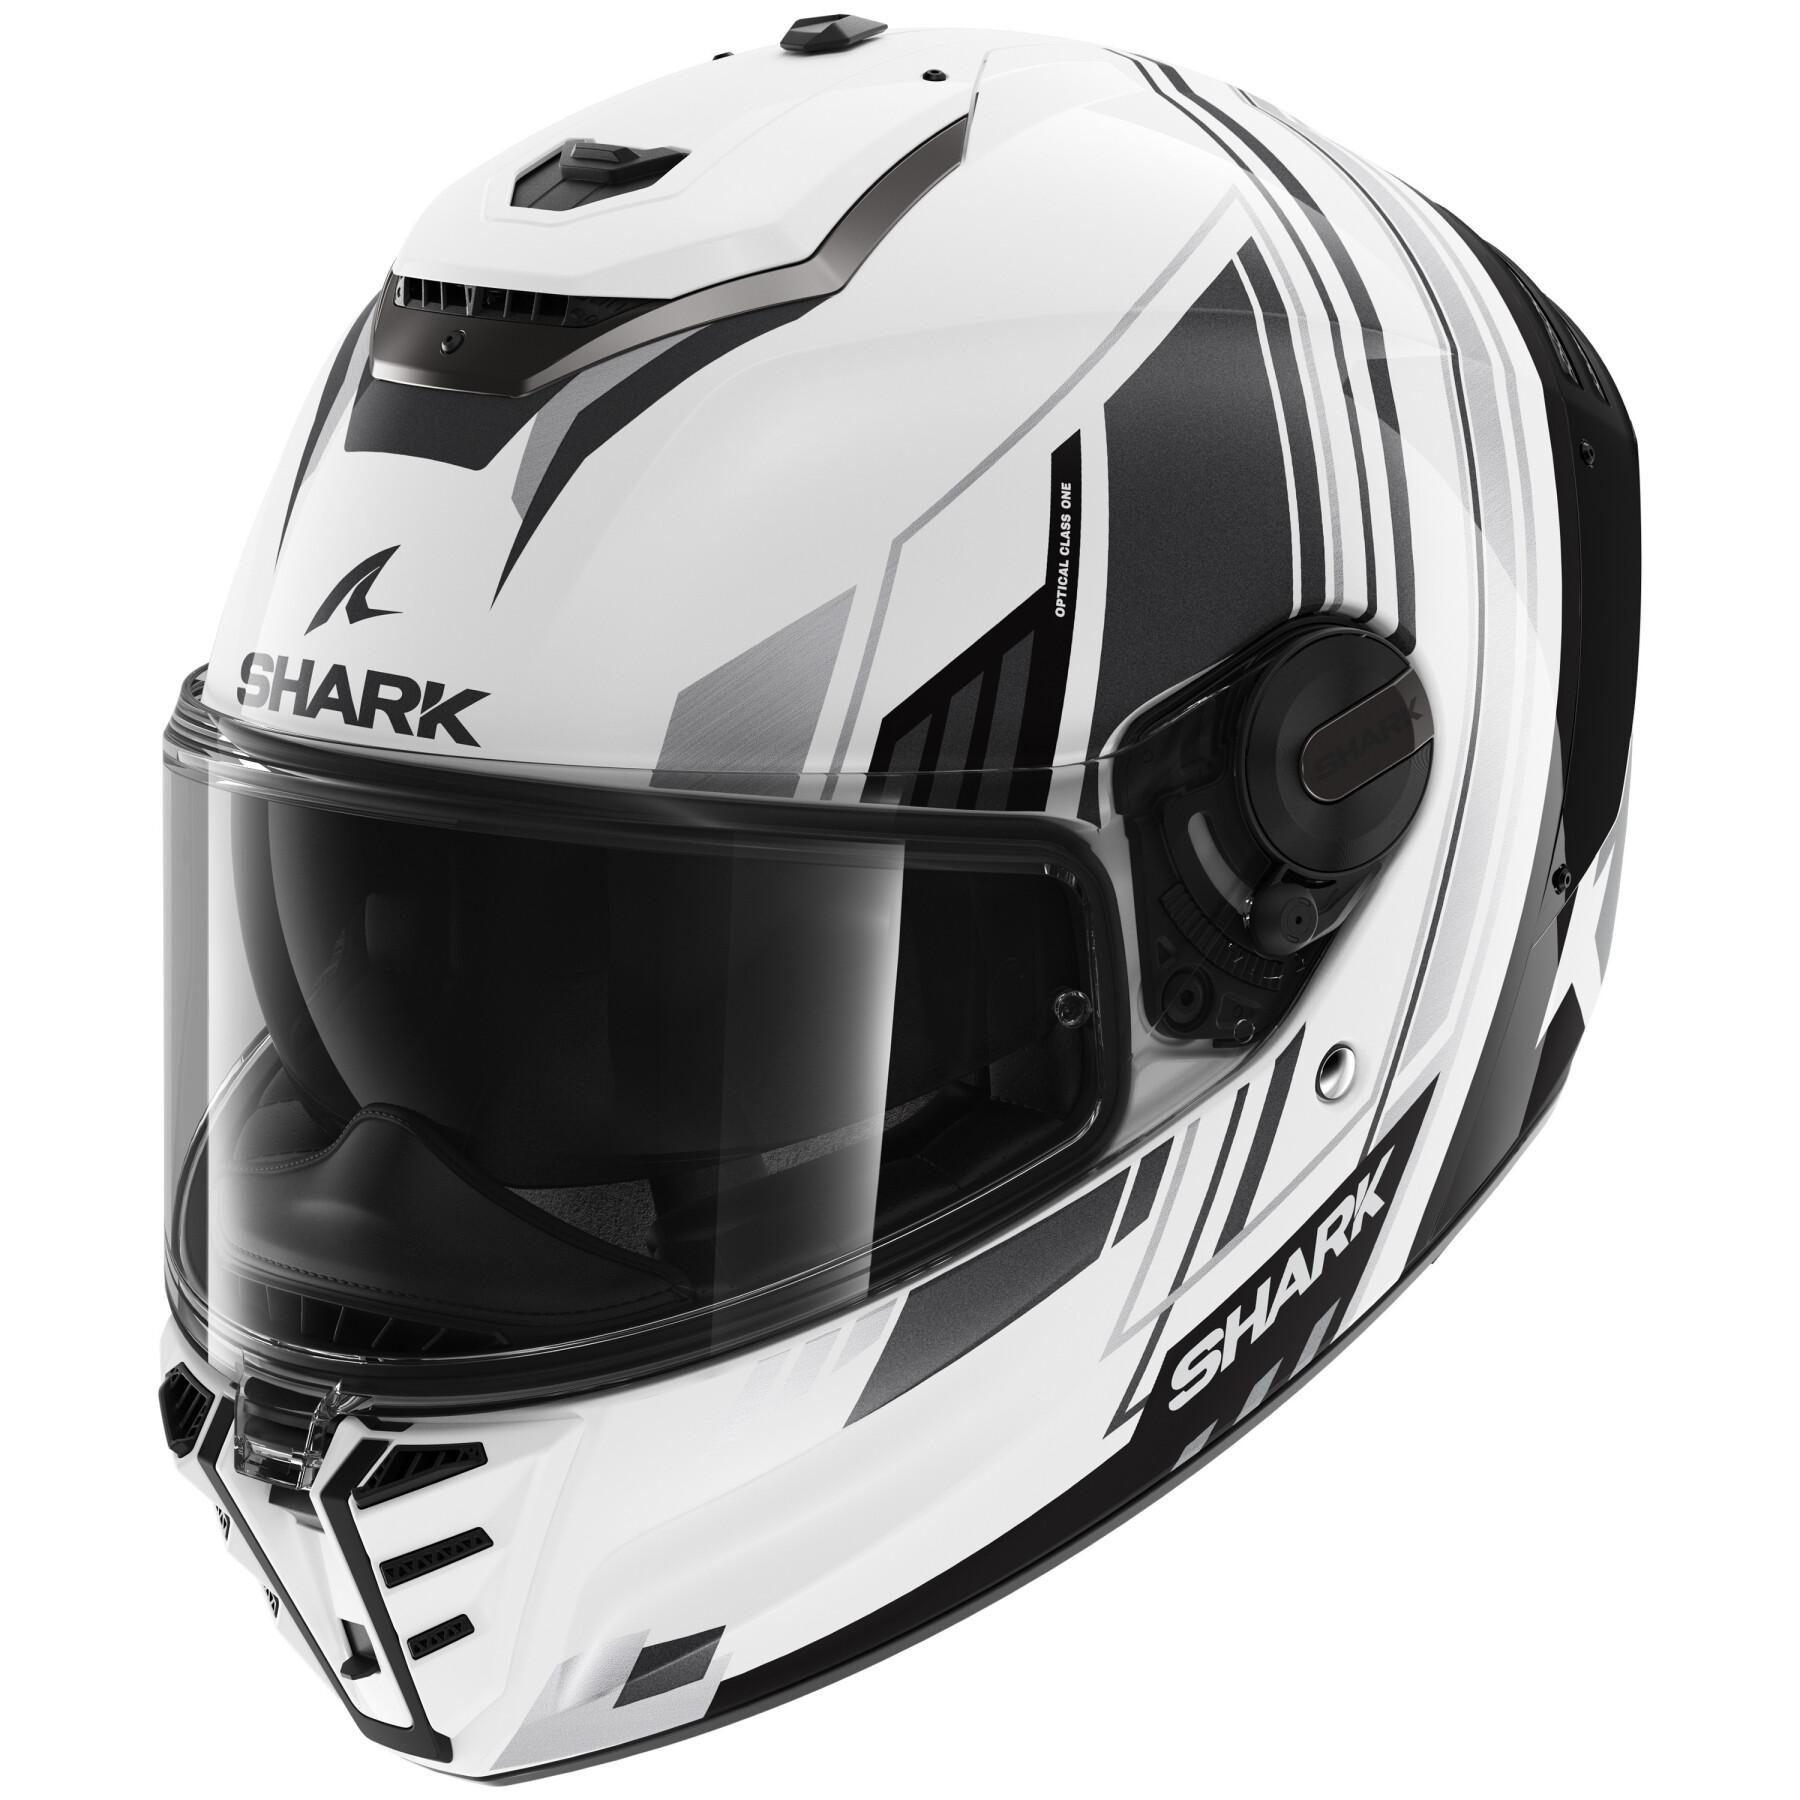 Full face motorcycle helmet Shark Spartan Rs Byrhon